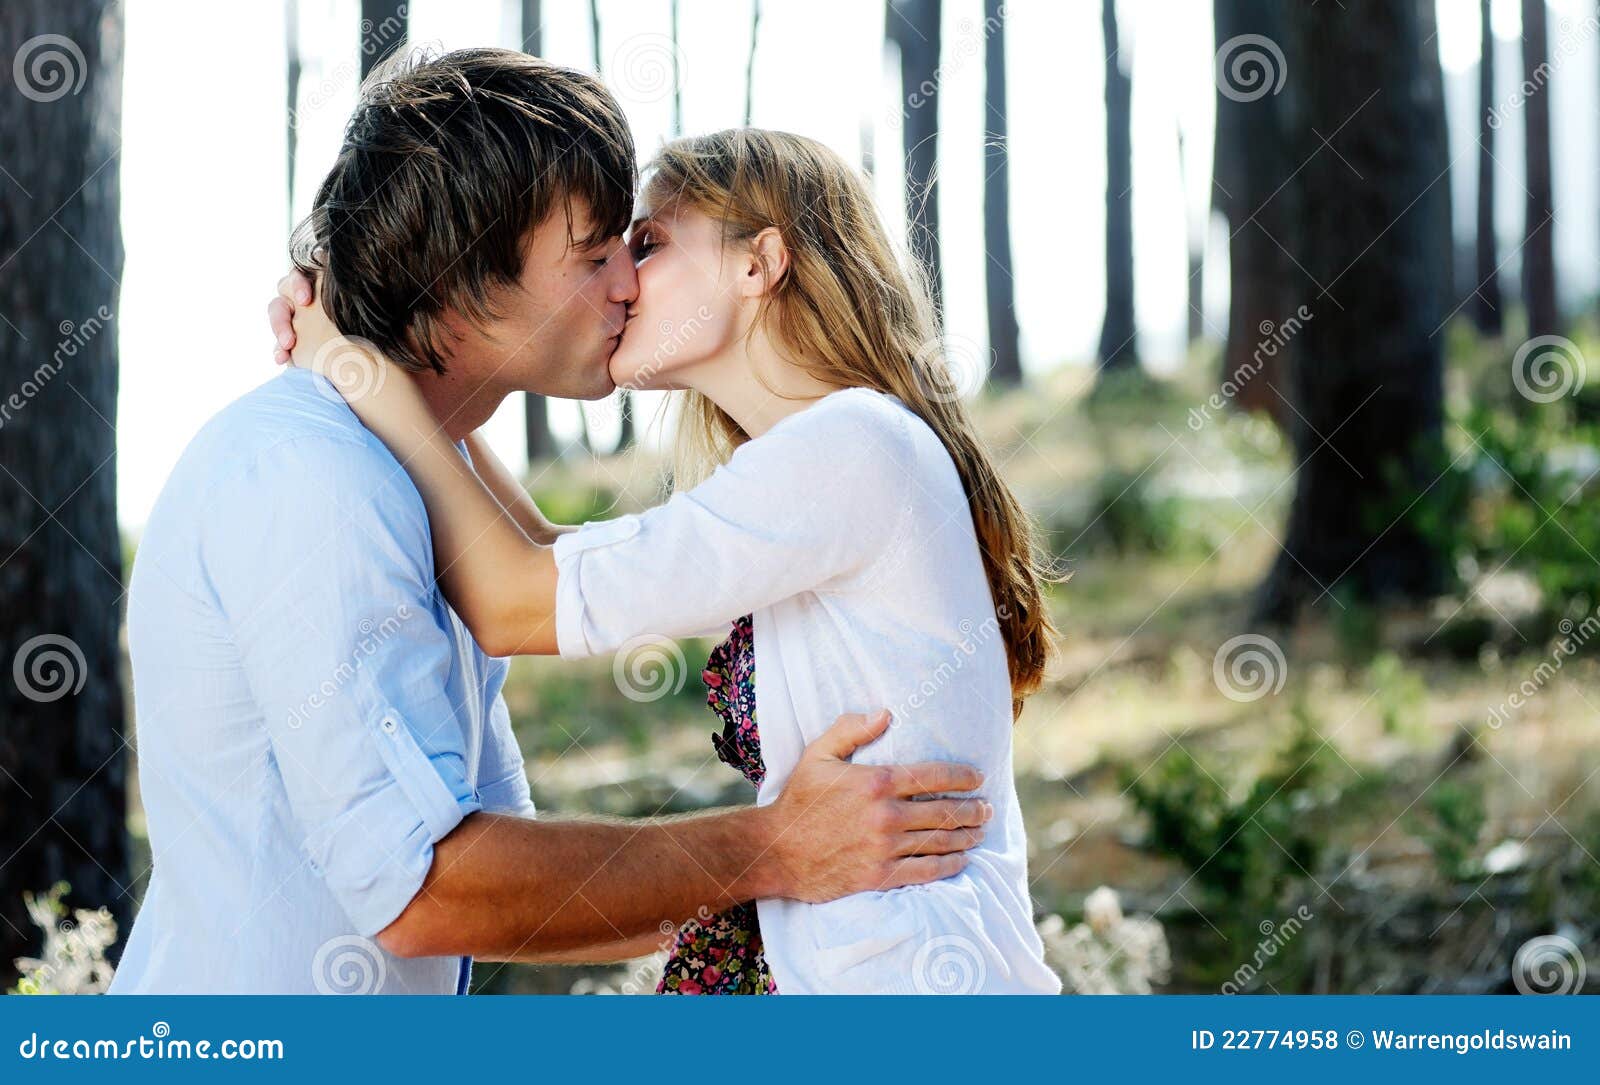 Муж будет поцелуем. Муж и жена поцелуй. Муж и жена целуются. Фотосессия муж и жена поцелуй. Муж и жена милуются.